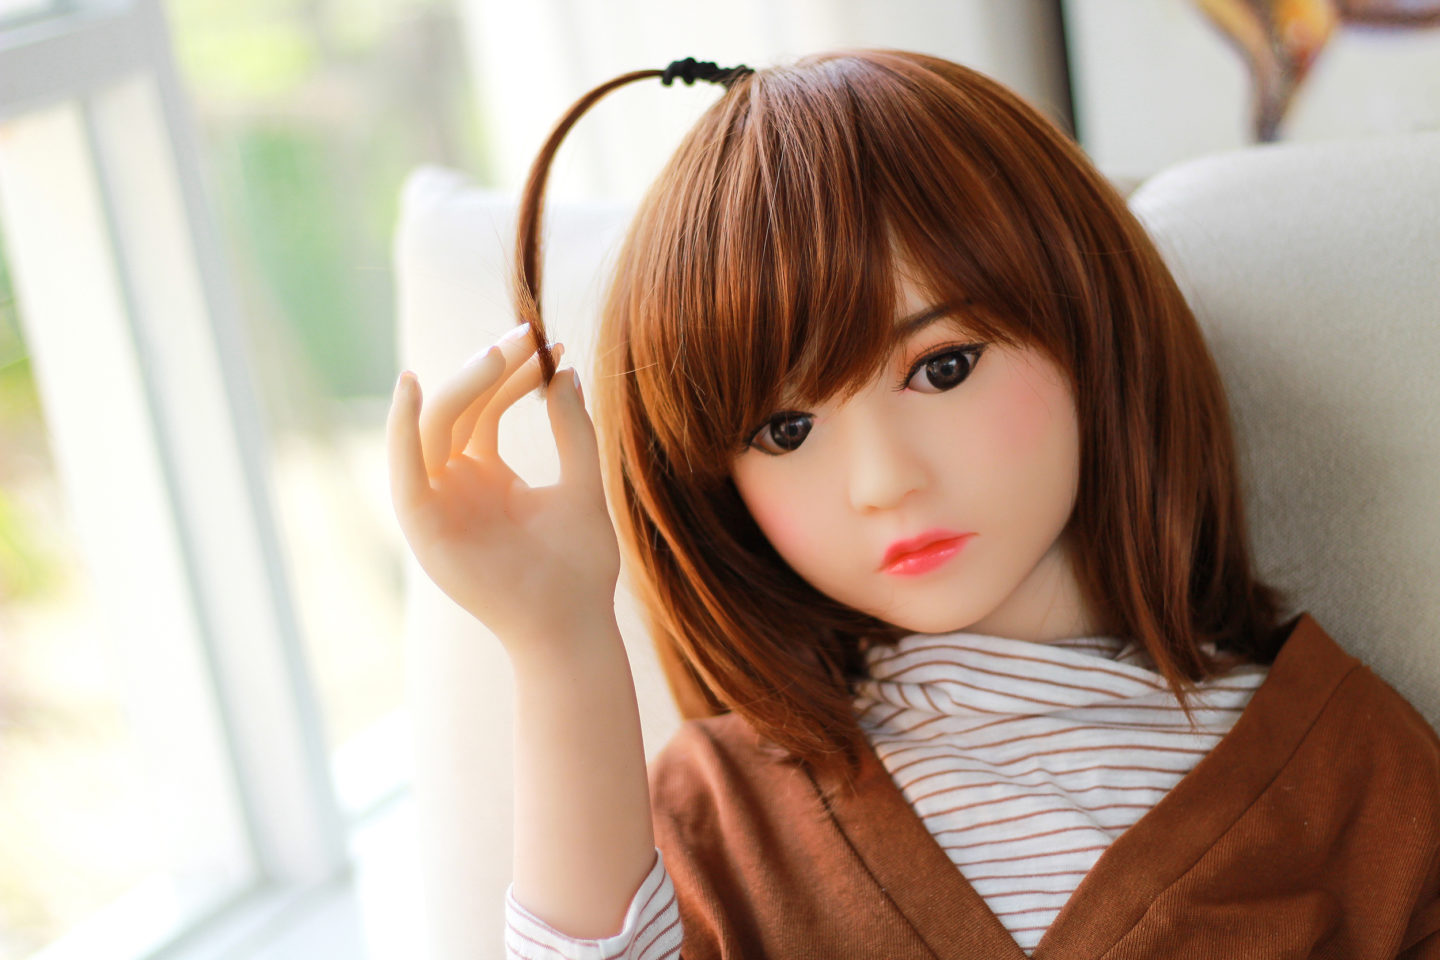 Giana - Cutie Doll 3' 3 (100cm) Cup A